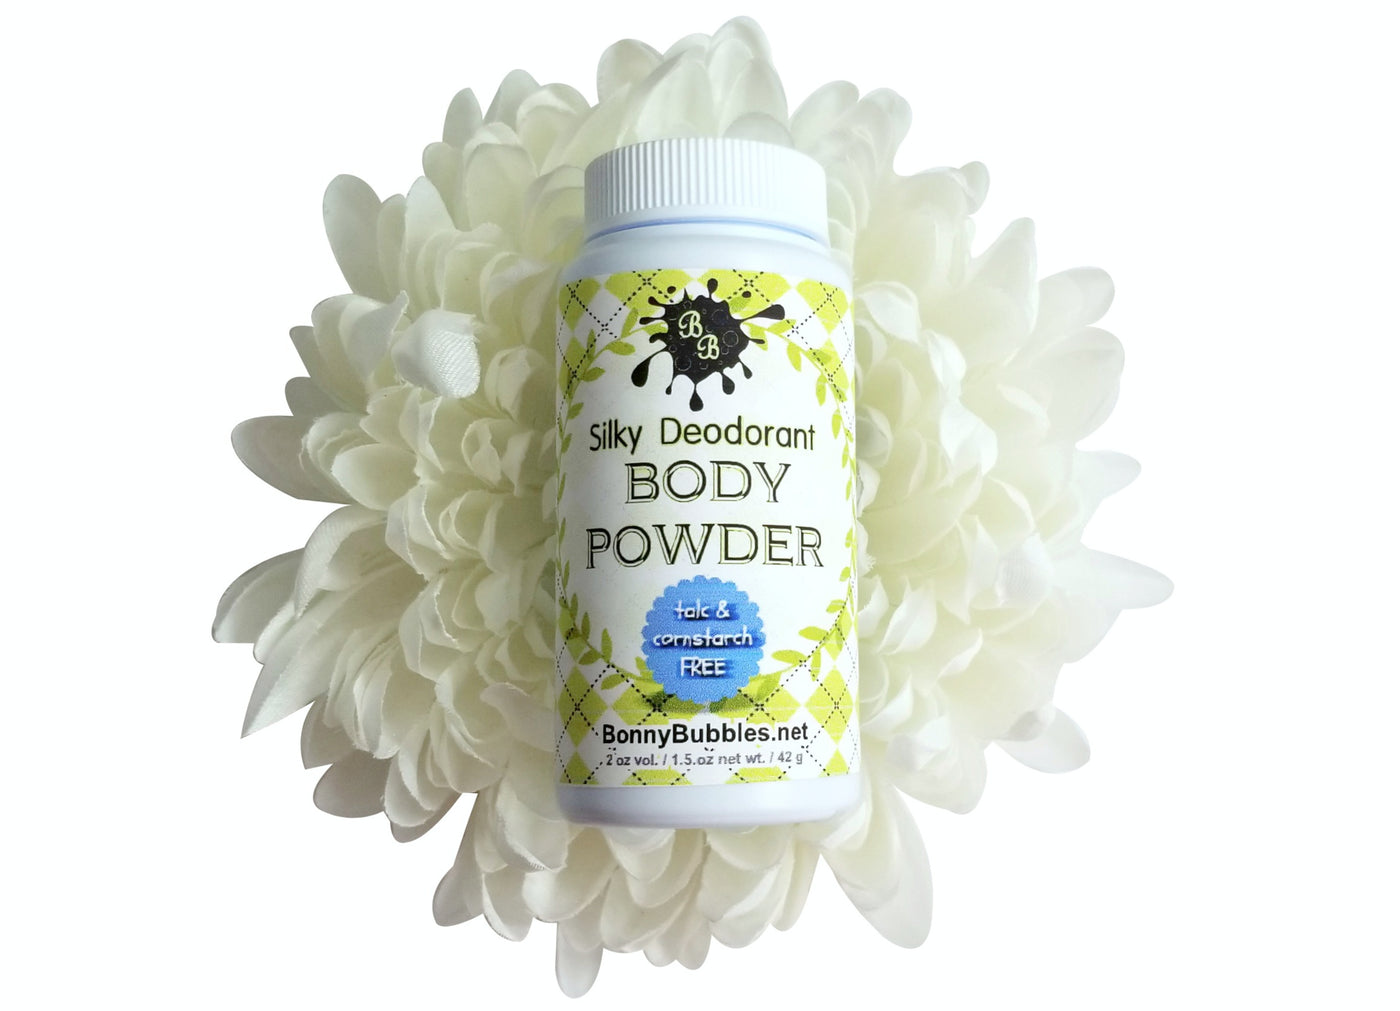 Body Powder, Pick a Scent - Talc and Cornstarch Free – Bonny Bubbles